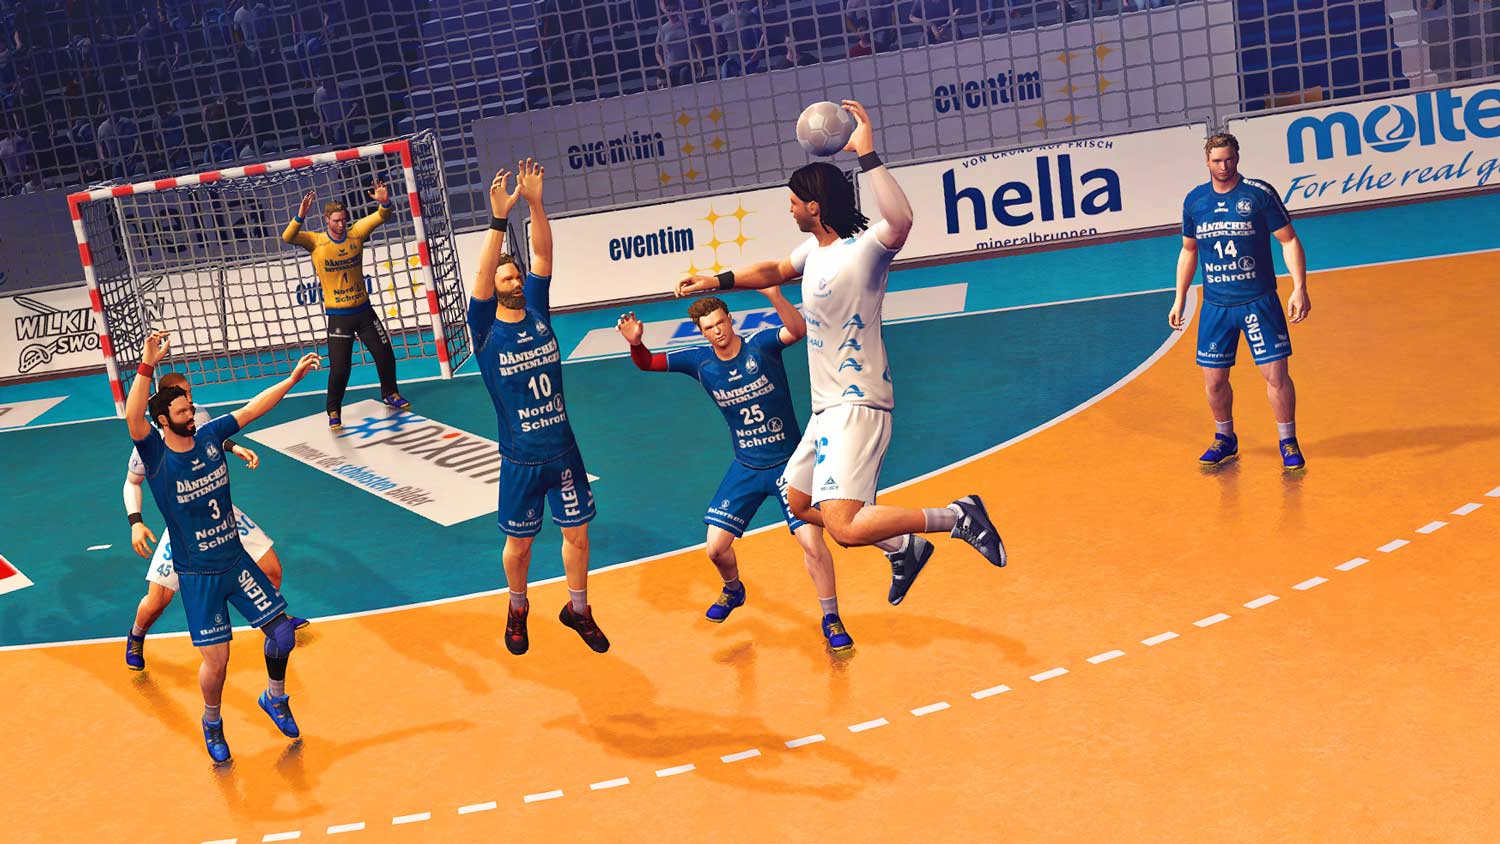 Handball 17 : vidéos du jeu sur PC, PlayStation 3, PlayStation 4 et Xbox  One - Gamekult